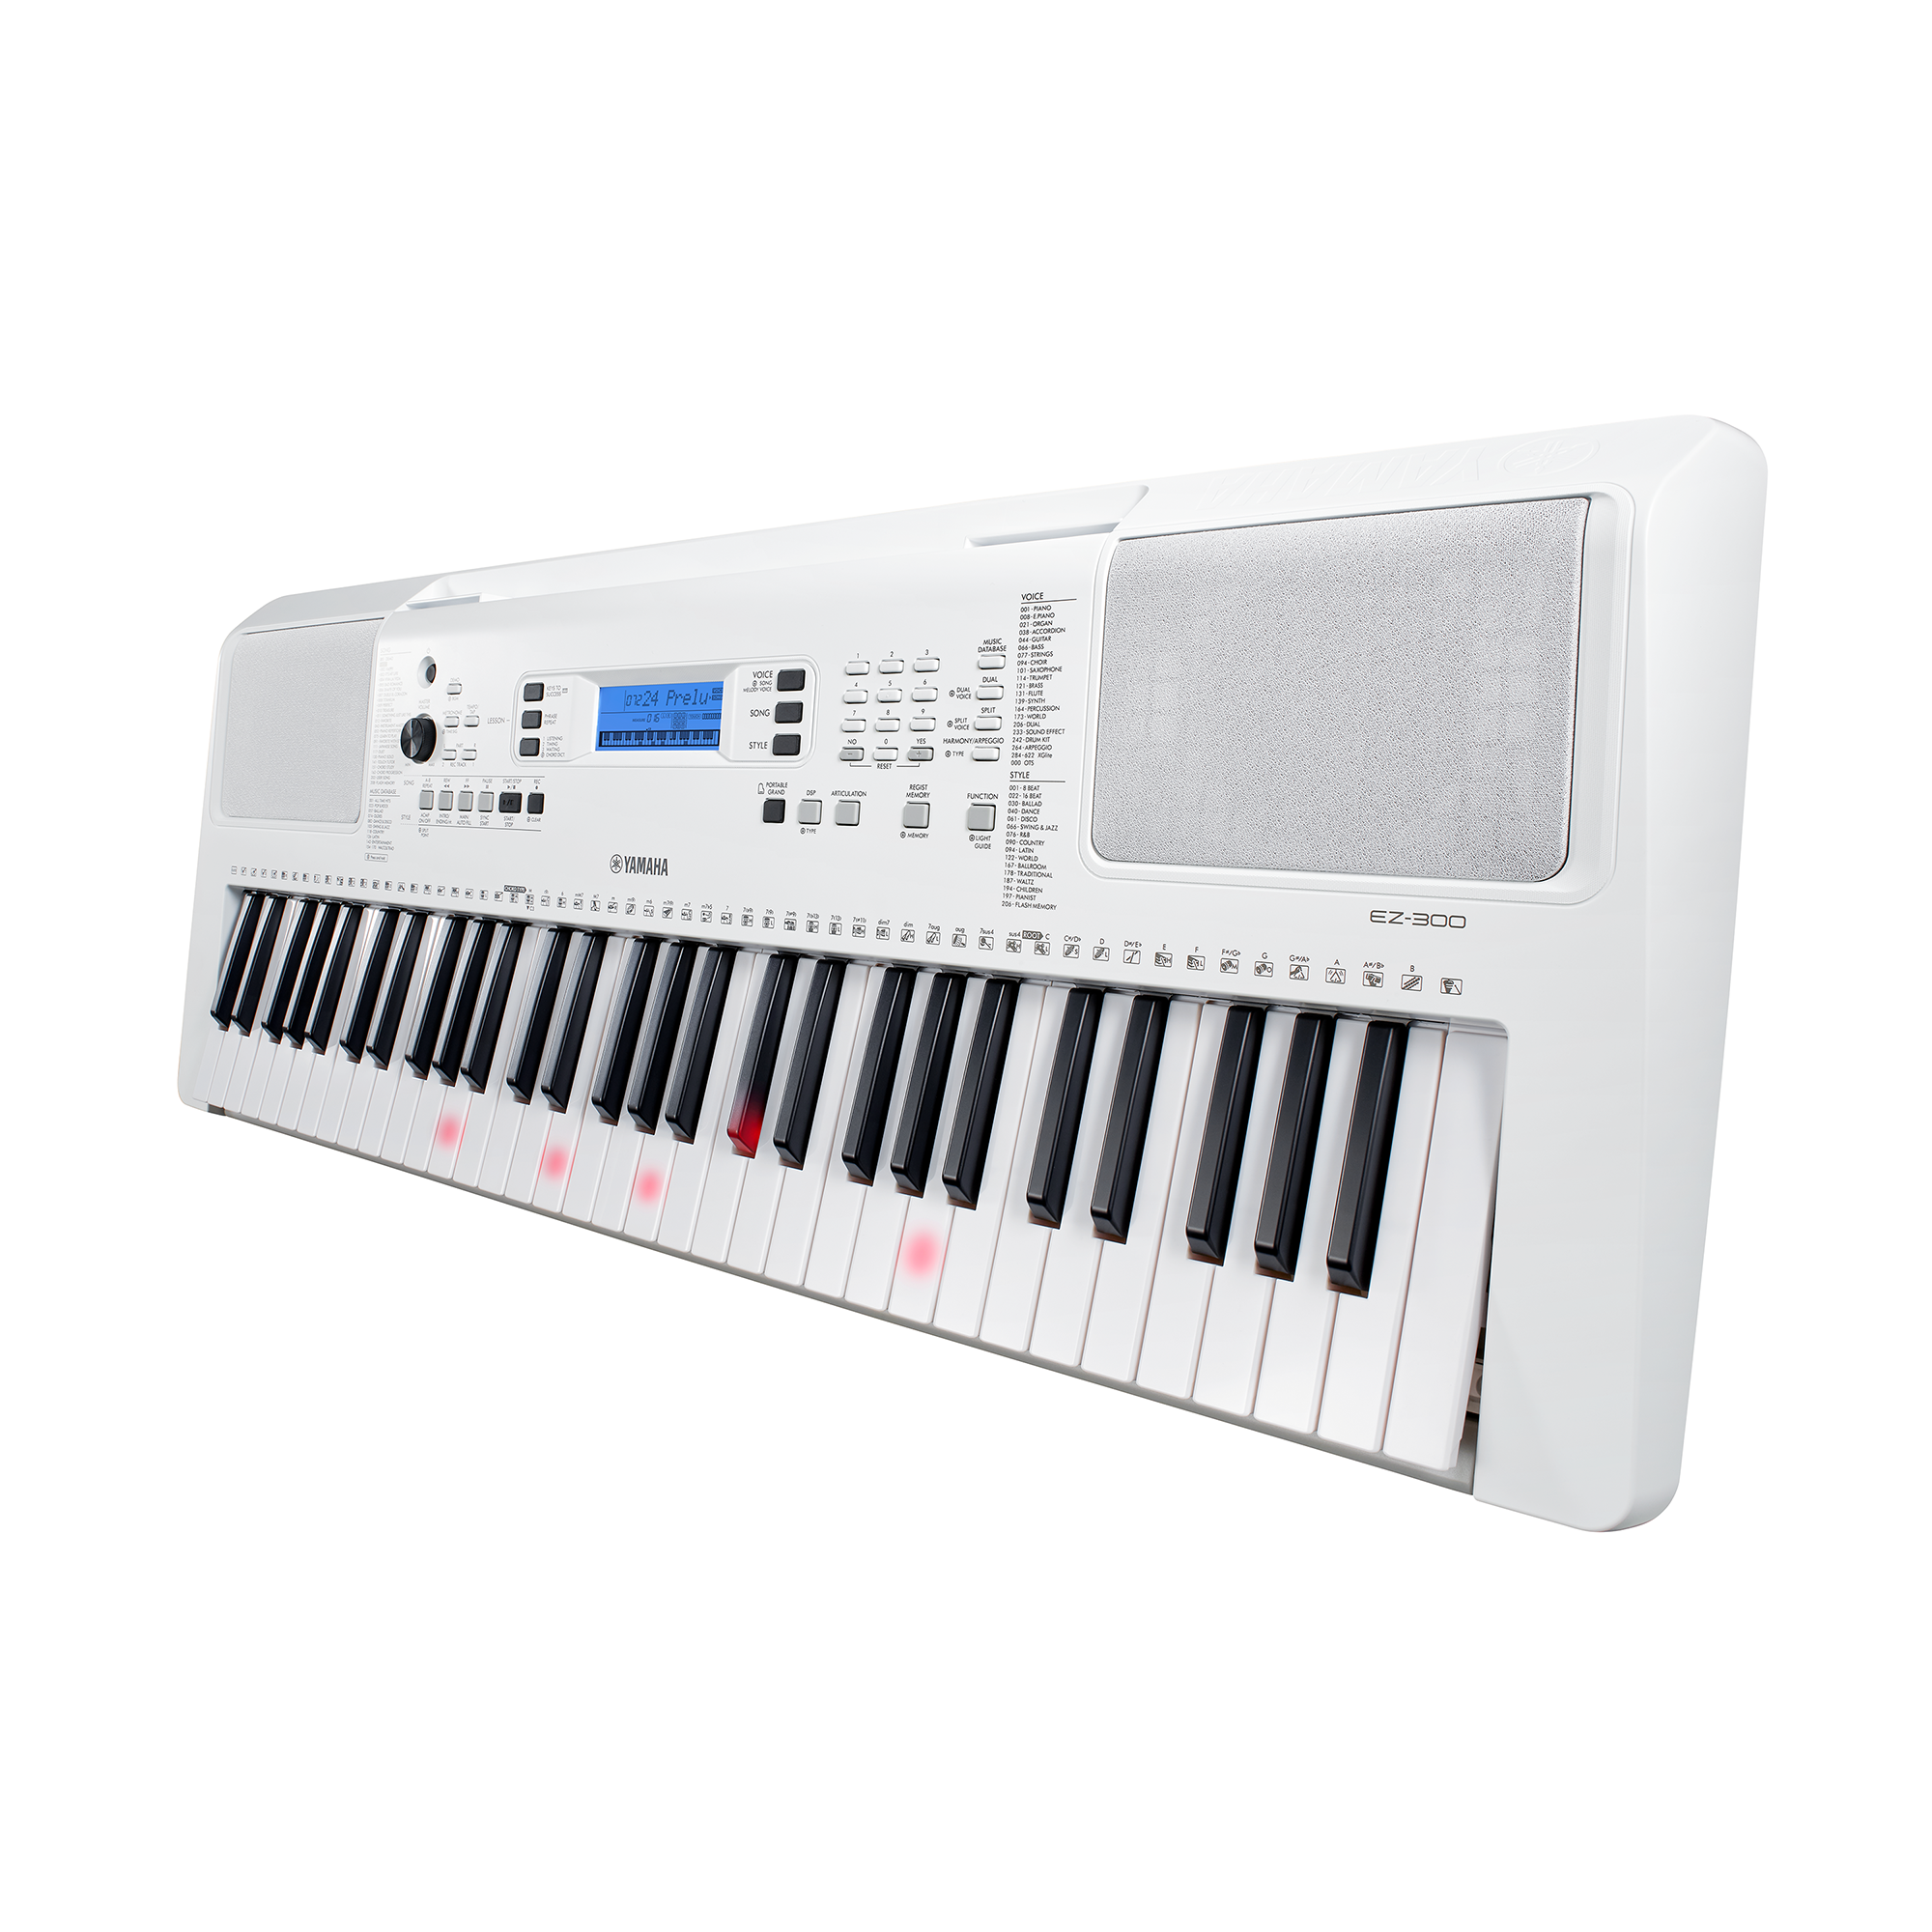 Yamaha EZ-300 Portable Keyboard with Lighted Keys